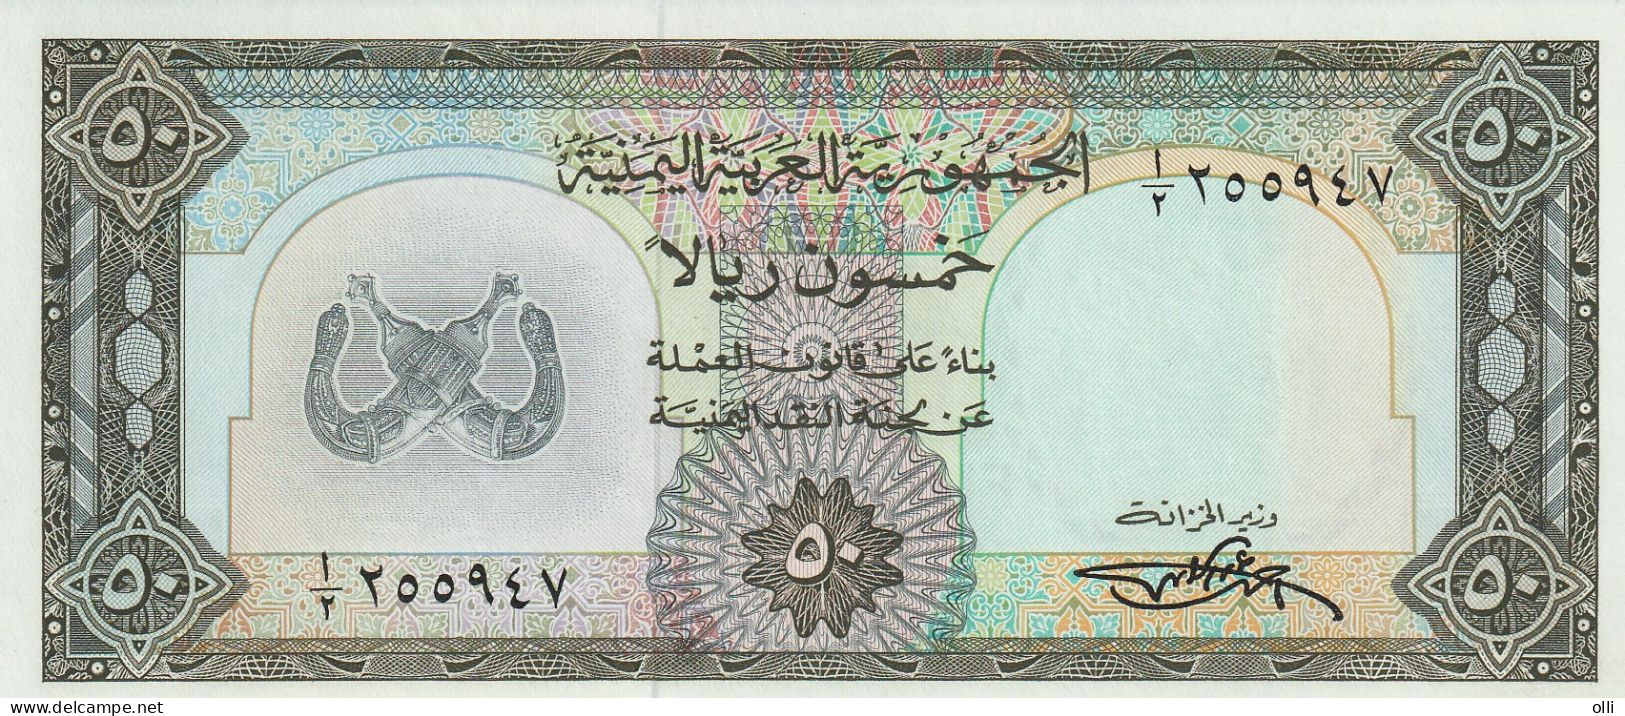 Yemen Arab Republic 50 Rials ND/1971   P-10   UNC - Jemen